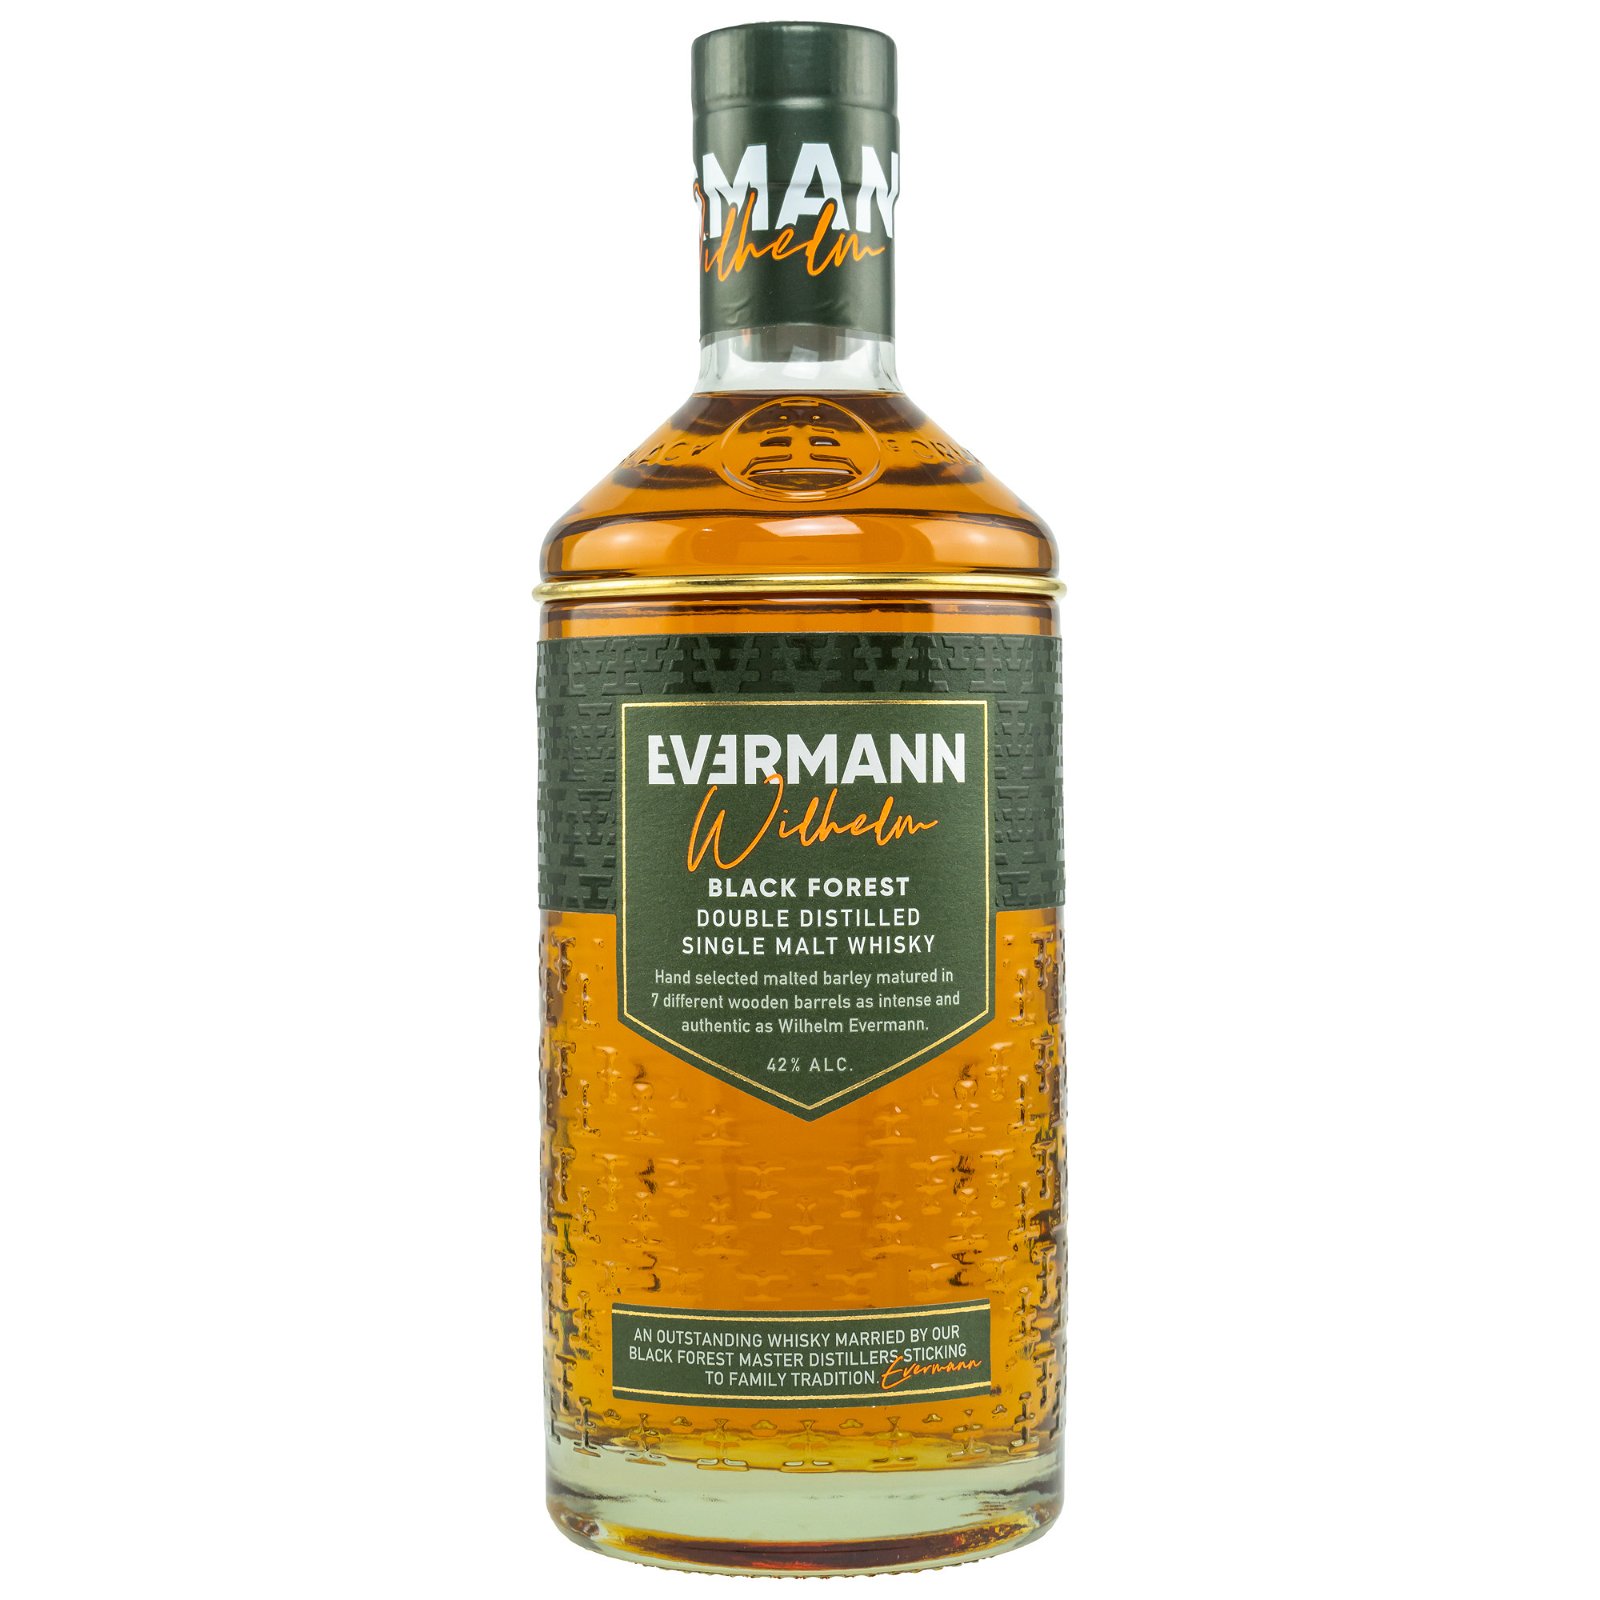 Evermann Wilhelm Black Forest Double Distilled Single Malt Whisky